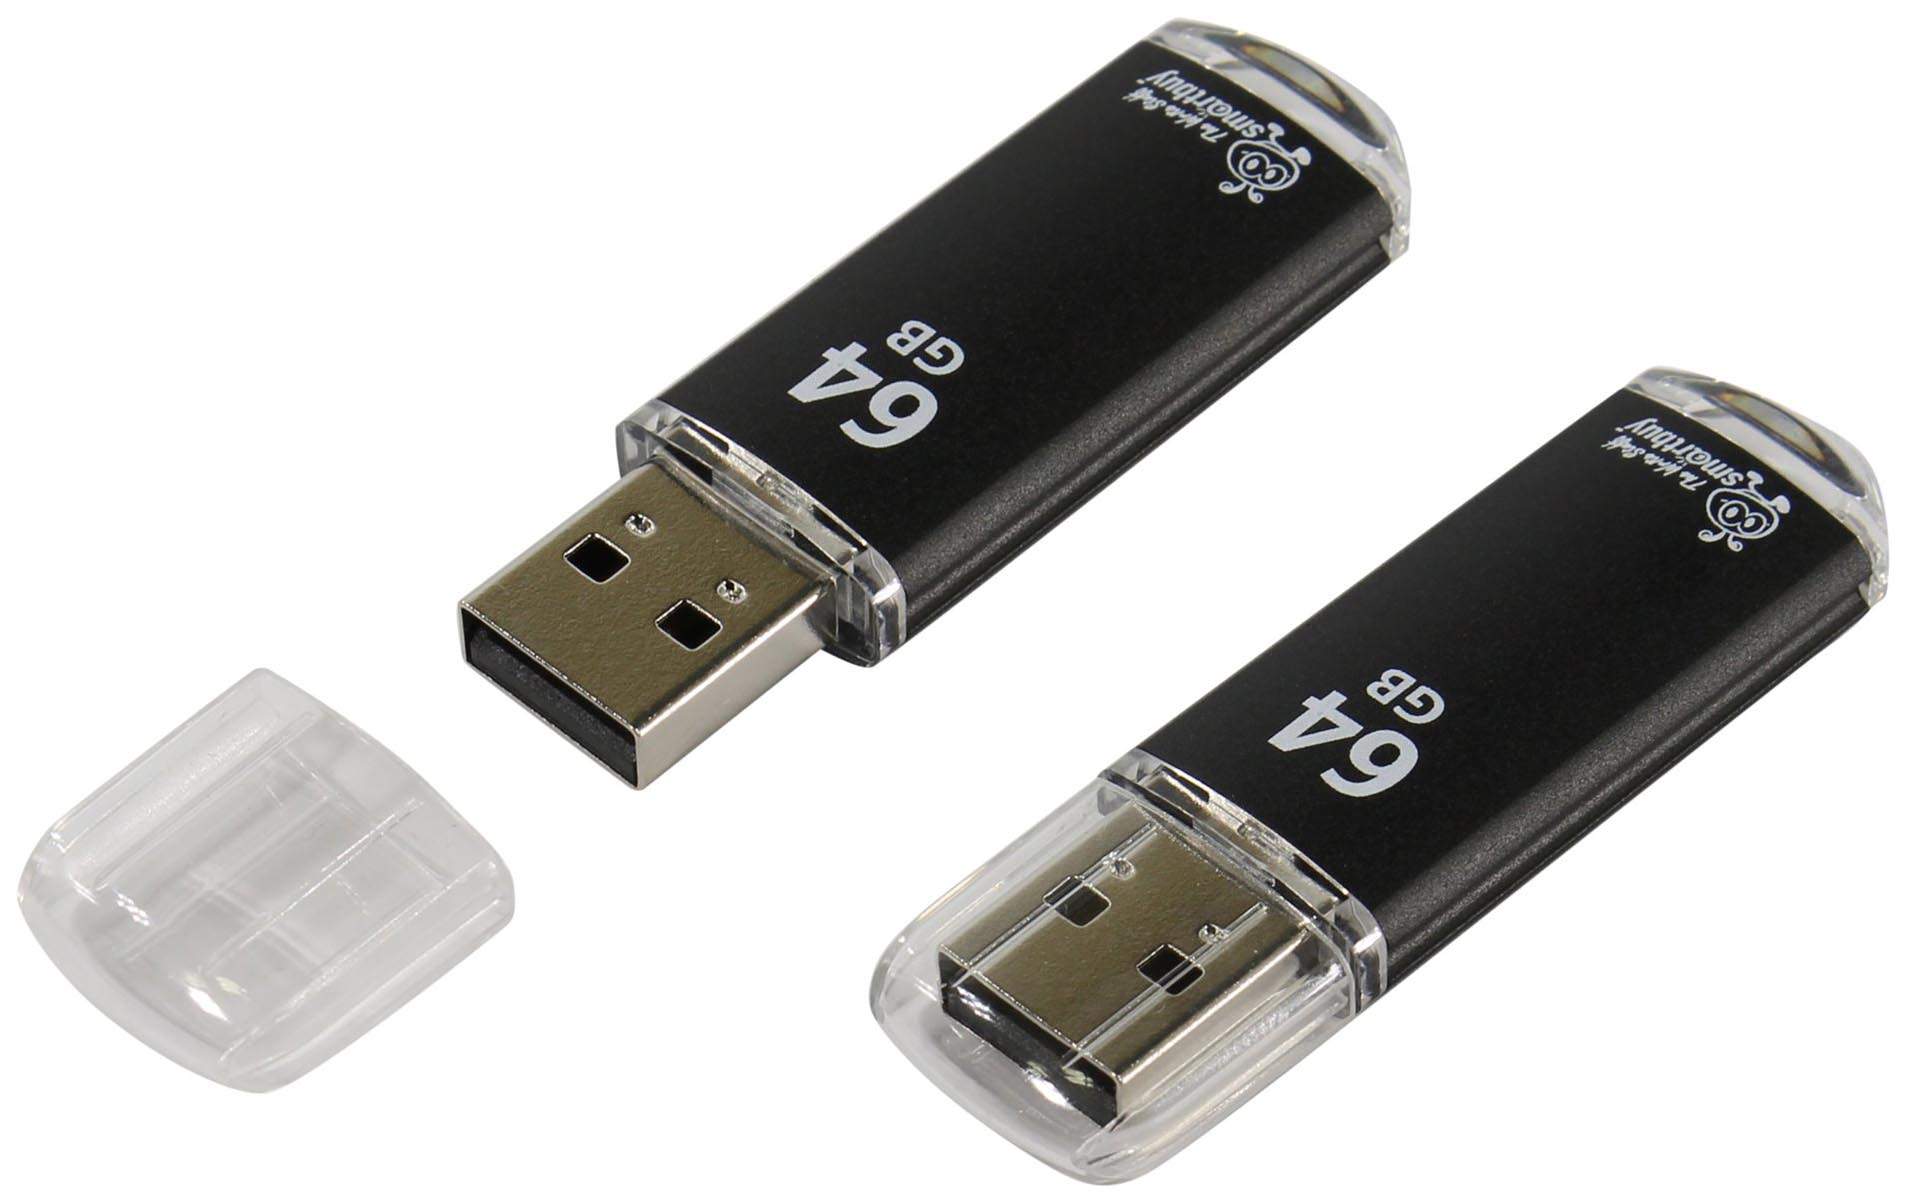 Usb 10 гб. Флешка USB SMARTBUY 64 GB. SMARTBUY флешка 64 ГБ. USB 3.0 накопитель 64 GB SMARTBUY V-Cut Black. Флешка USB 2.0 64 ГБ SMARTBUY V-Cut.